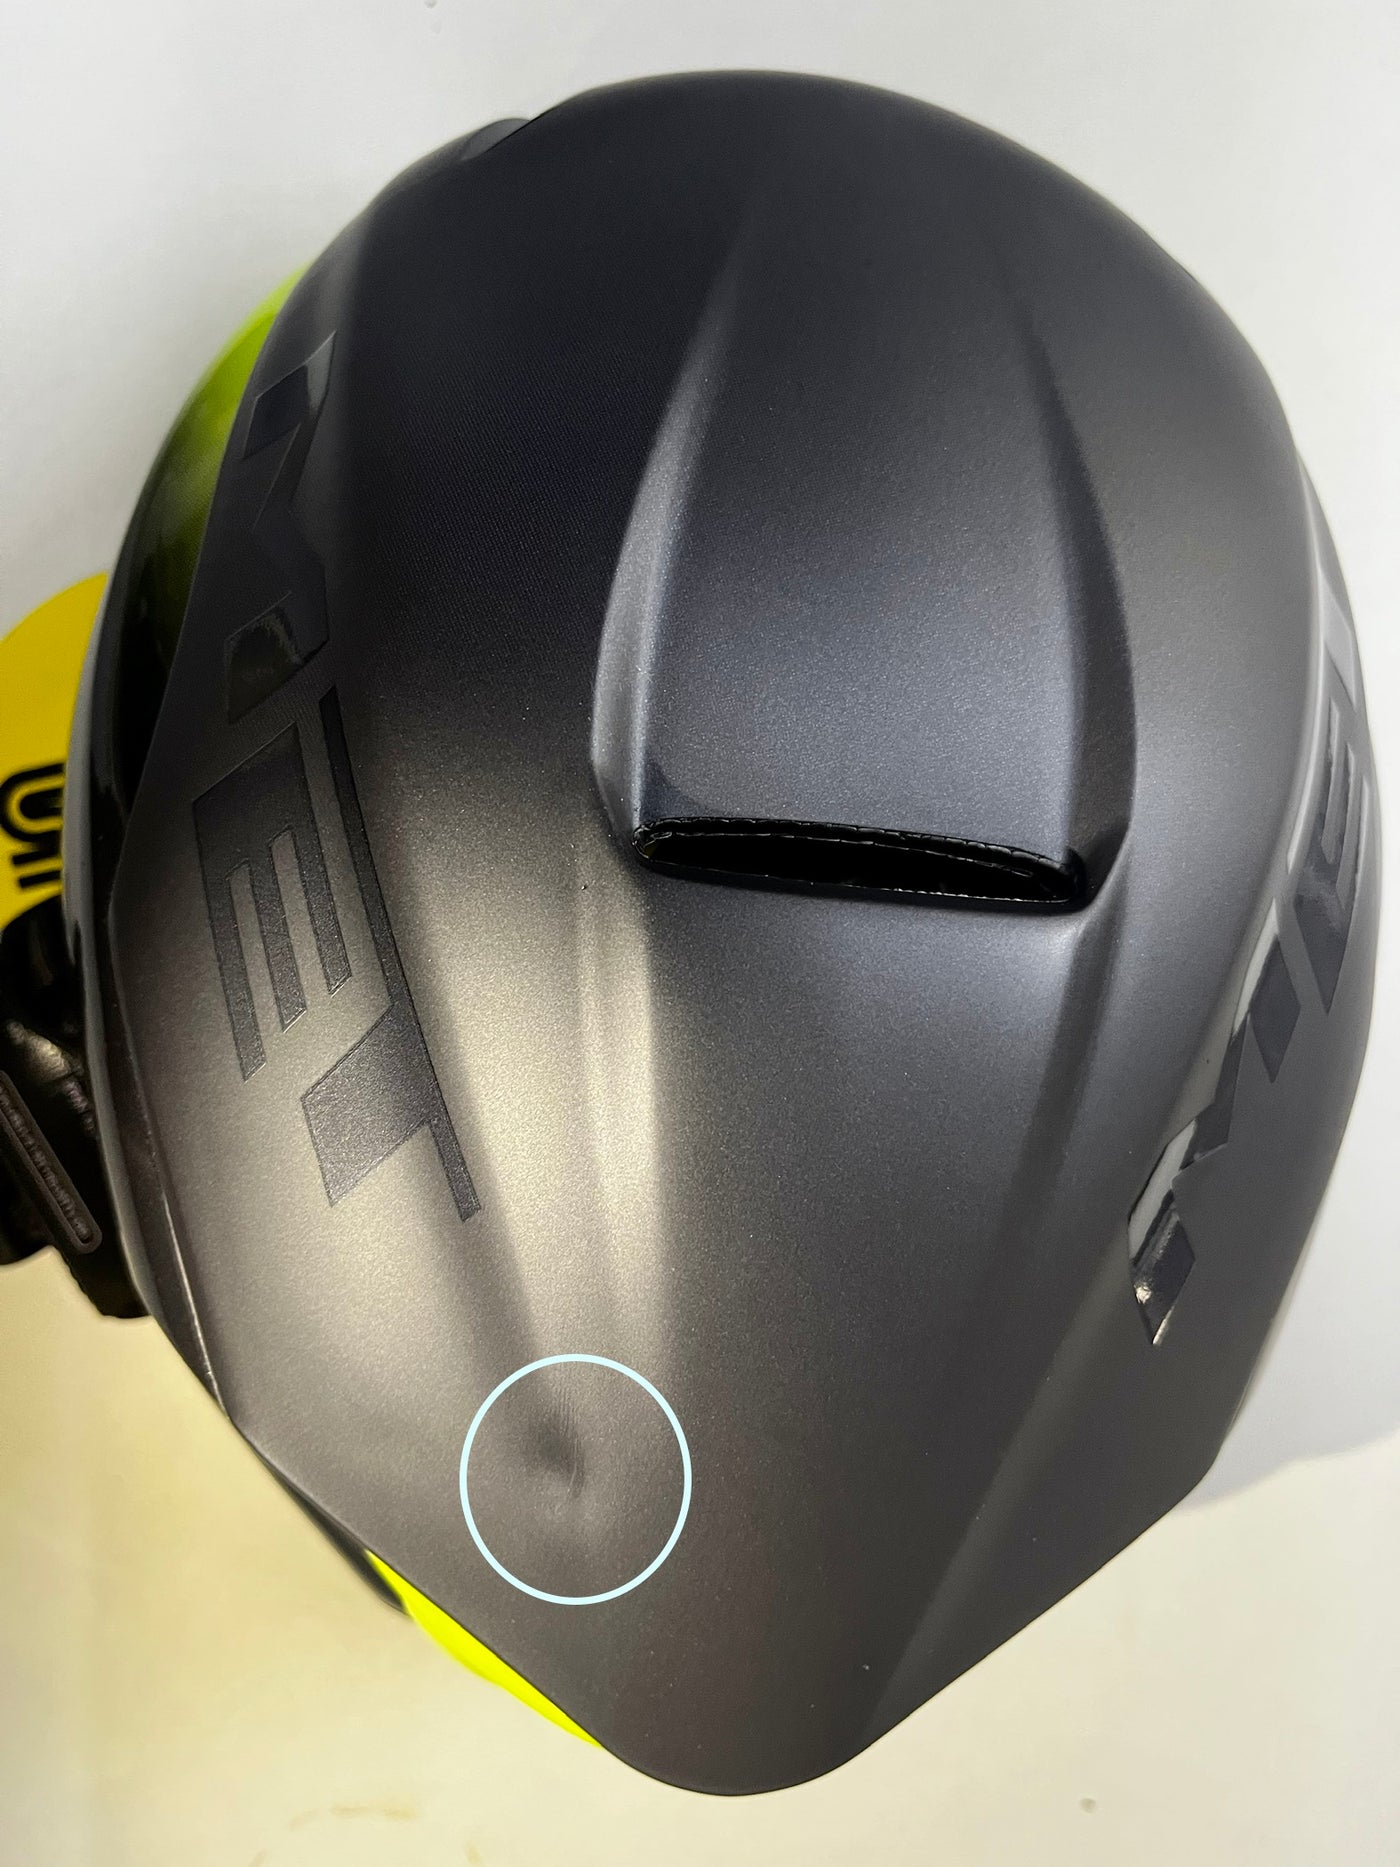 [Open Box] MET Manta MIPS Aero Road Cycling Helmet (Gray/Fluo Yellow/Matt Glossy)